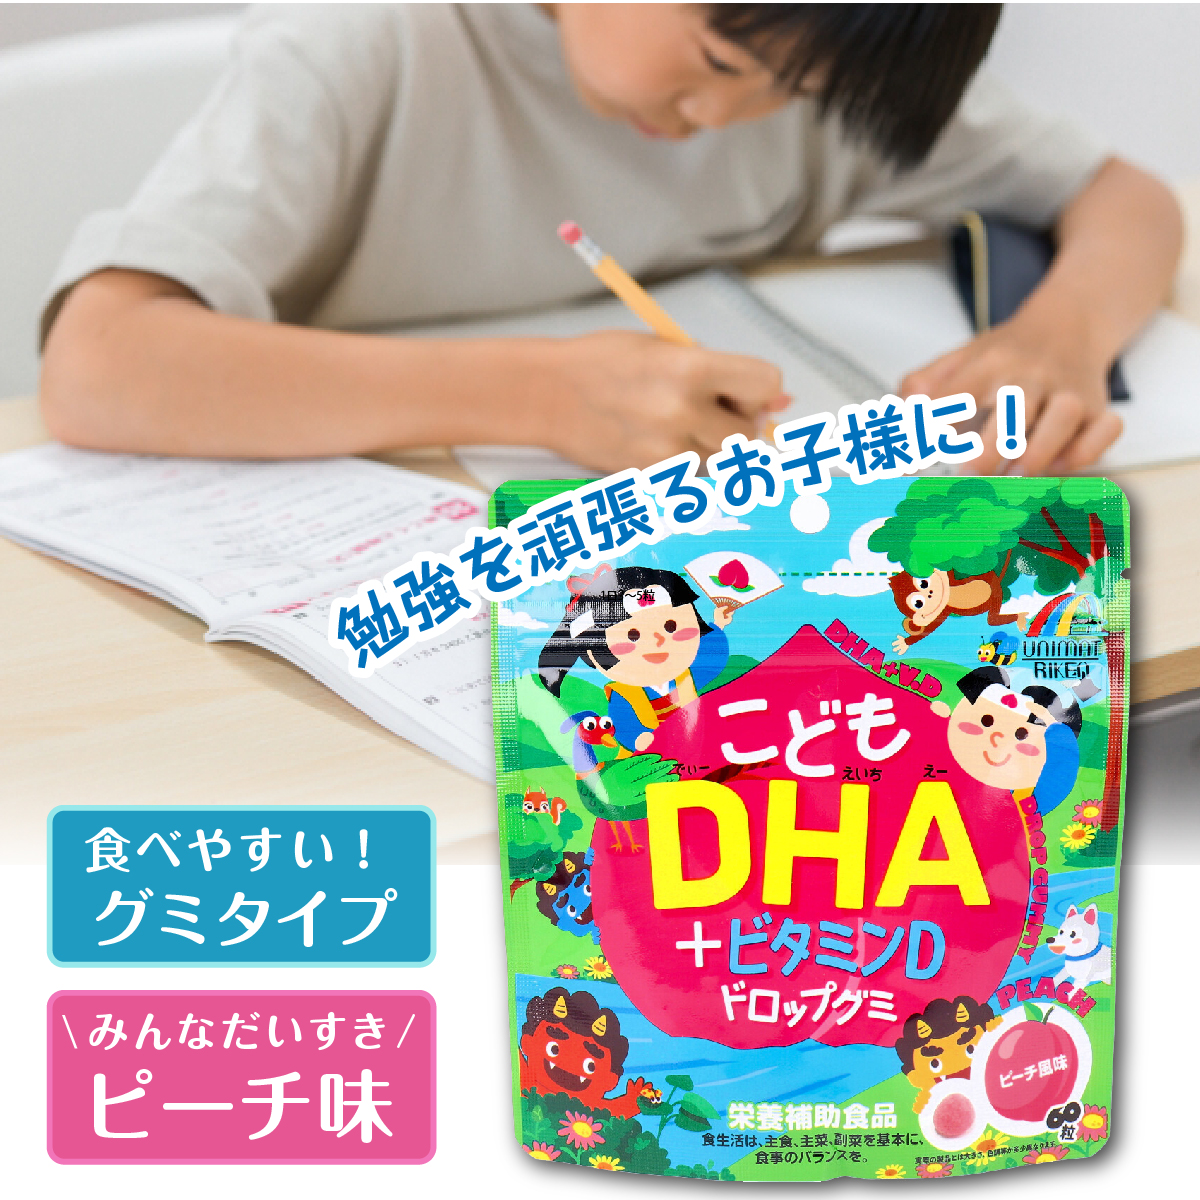 DHA グミ こどもDHA ビタミンD ドロップグミ ピーチ風味 60粒入 妊婦 DHA 子供グミ 子ども 栄養 サプリ お菓子 栄養補助食品 送料無料